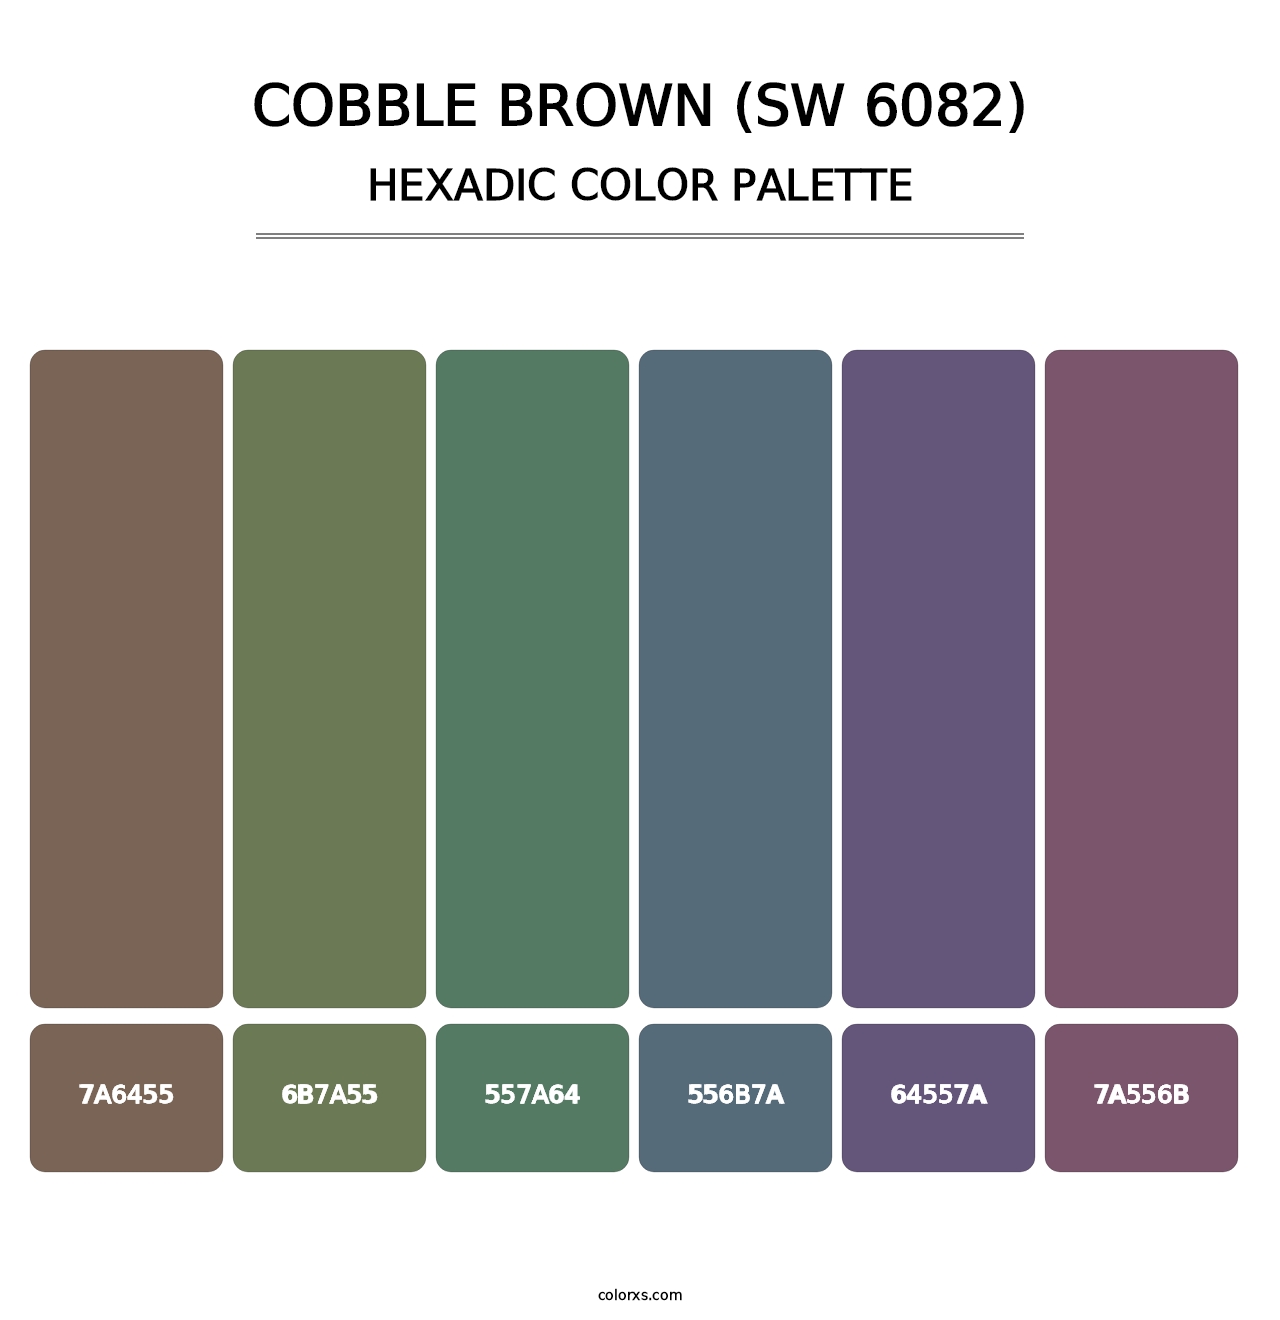 Cobble Brown (SW 6082) - Hexadic Color Palette